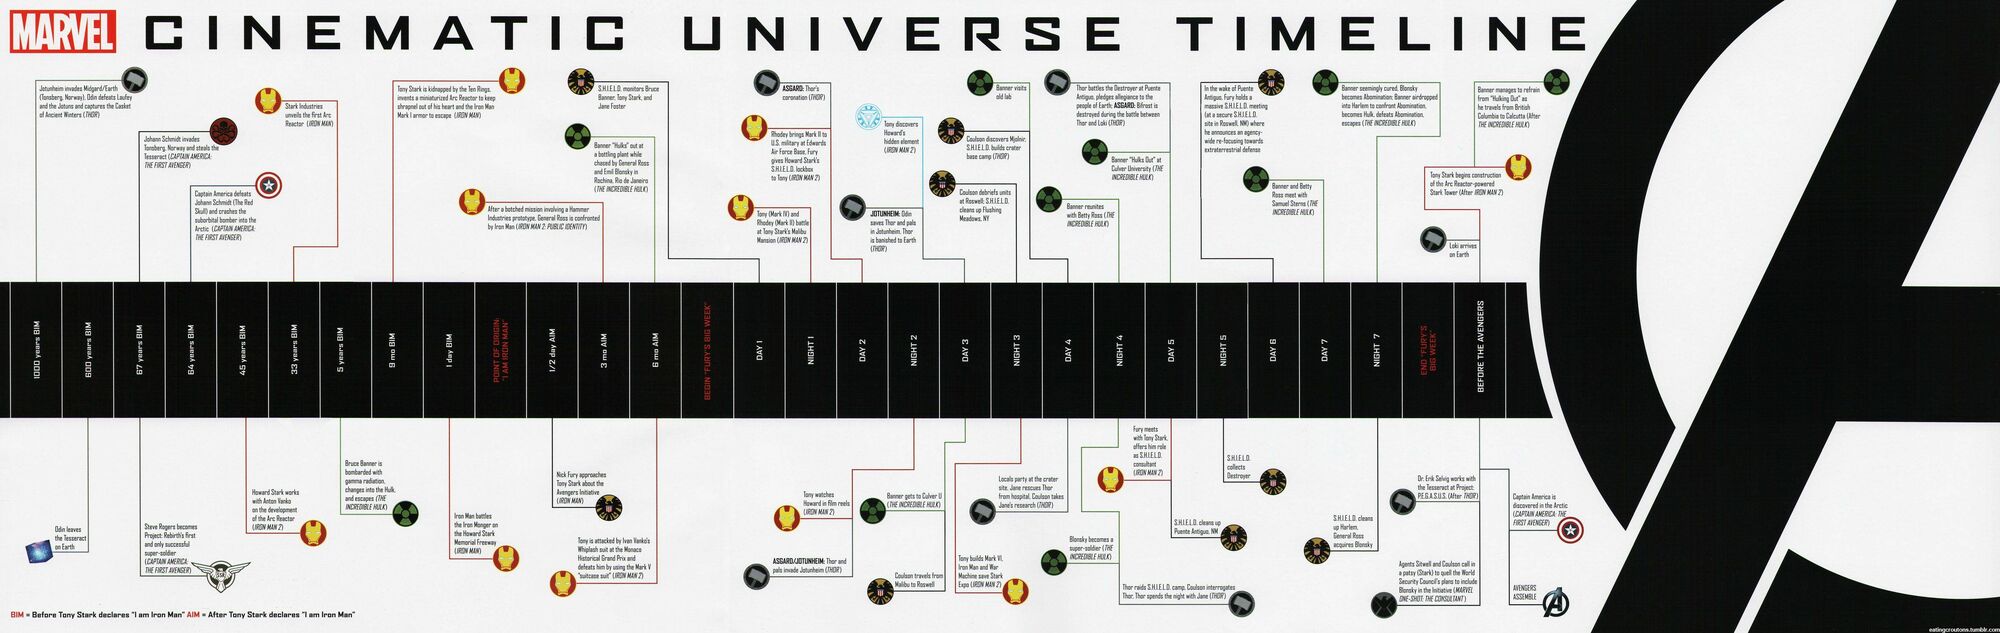 marvel timeline universe cinematic wikia marvelcinematicuniverse wiki fandom